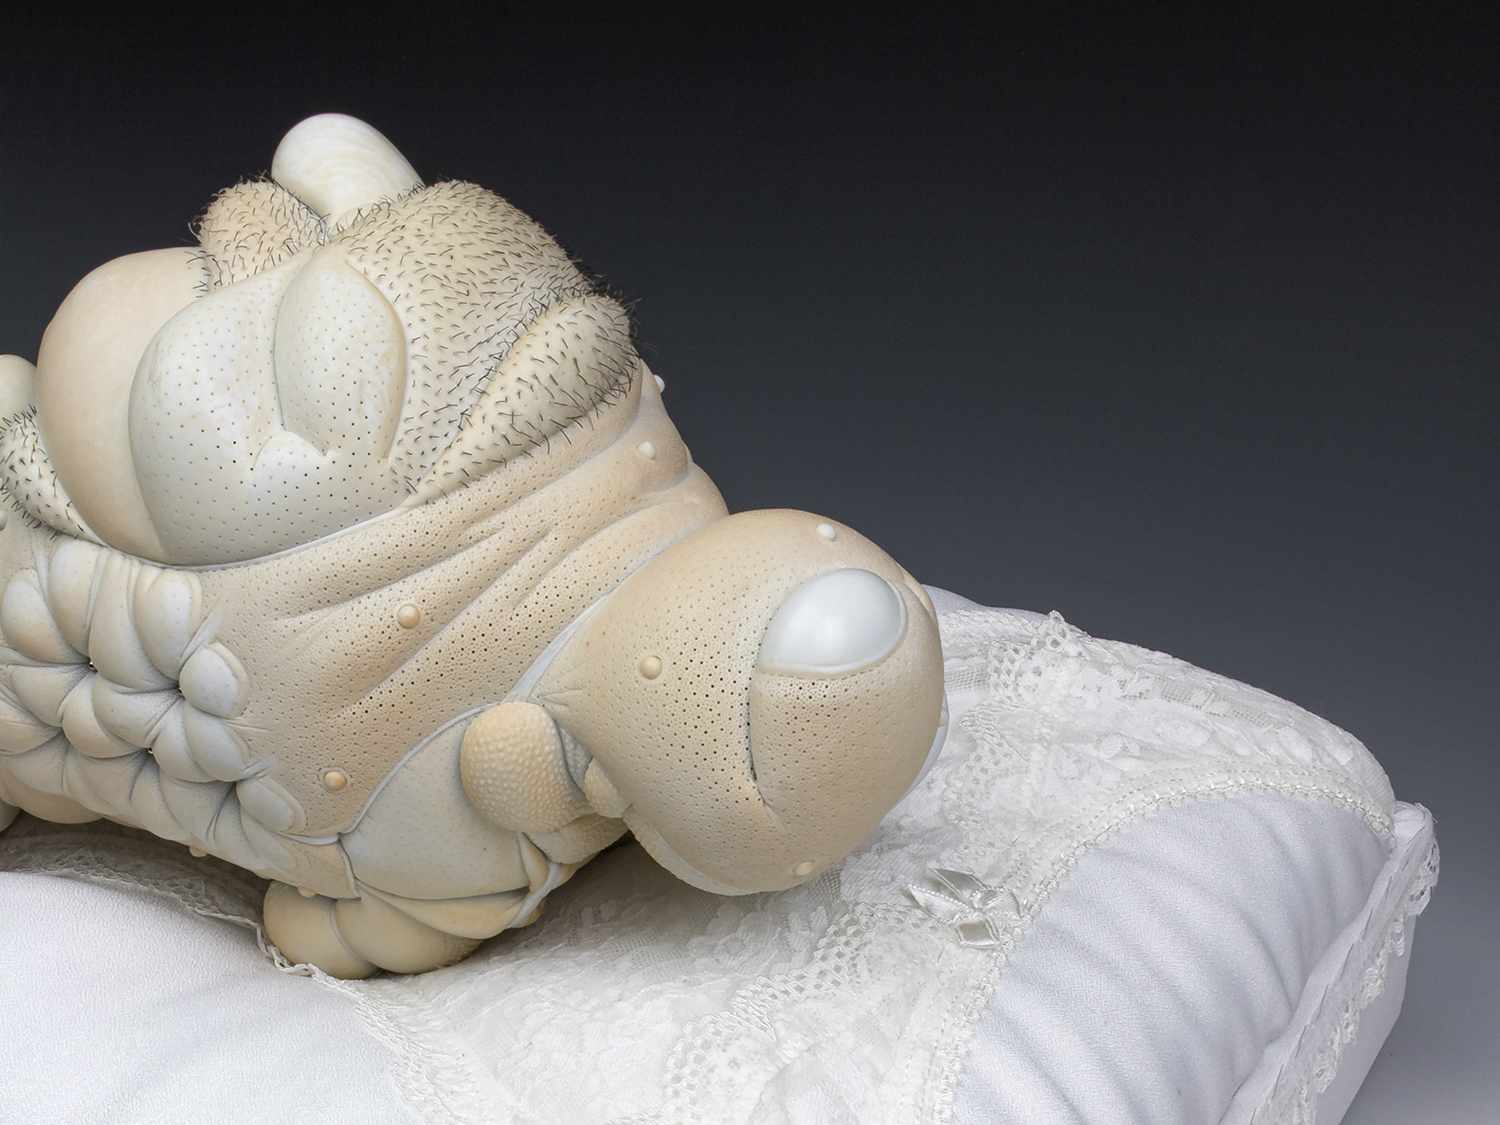 Jason Briggs "Paris" (detail 7). porcelain, hair, and mixed media sculpture ceramics.